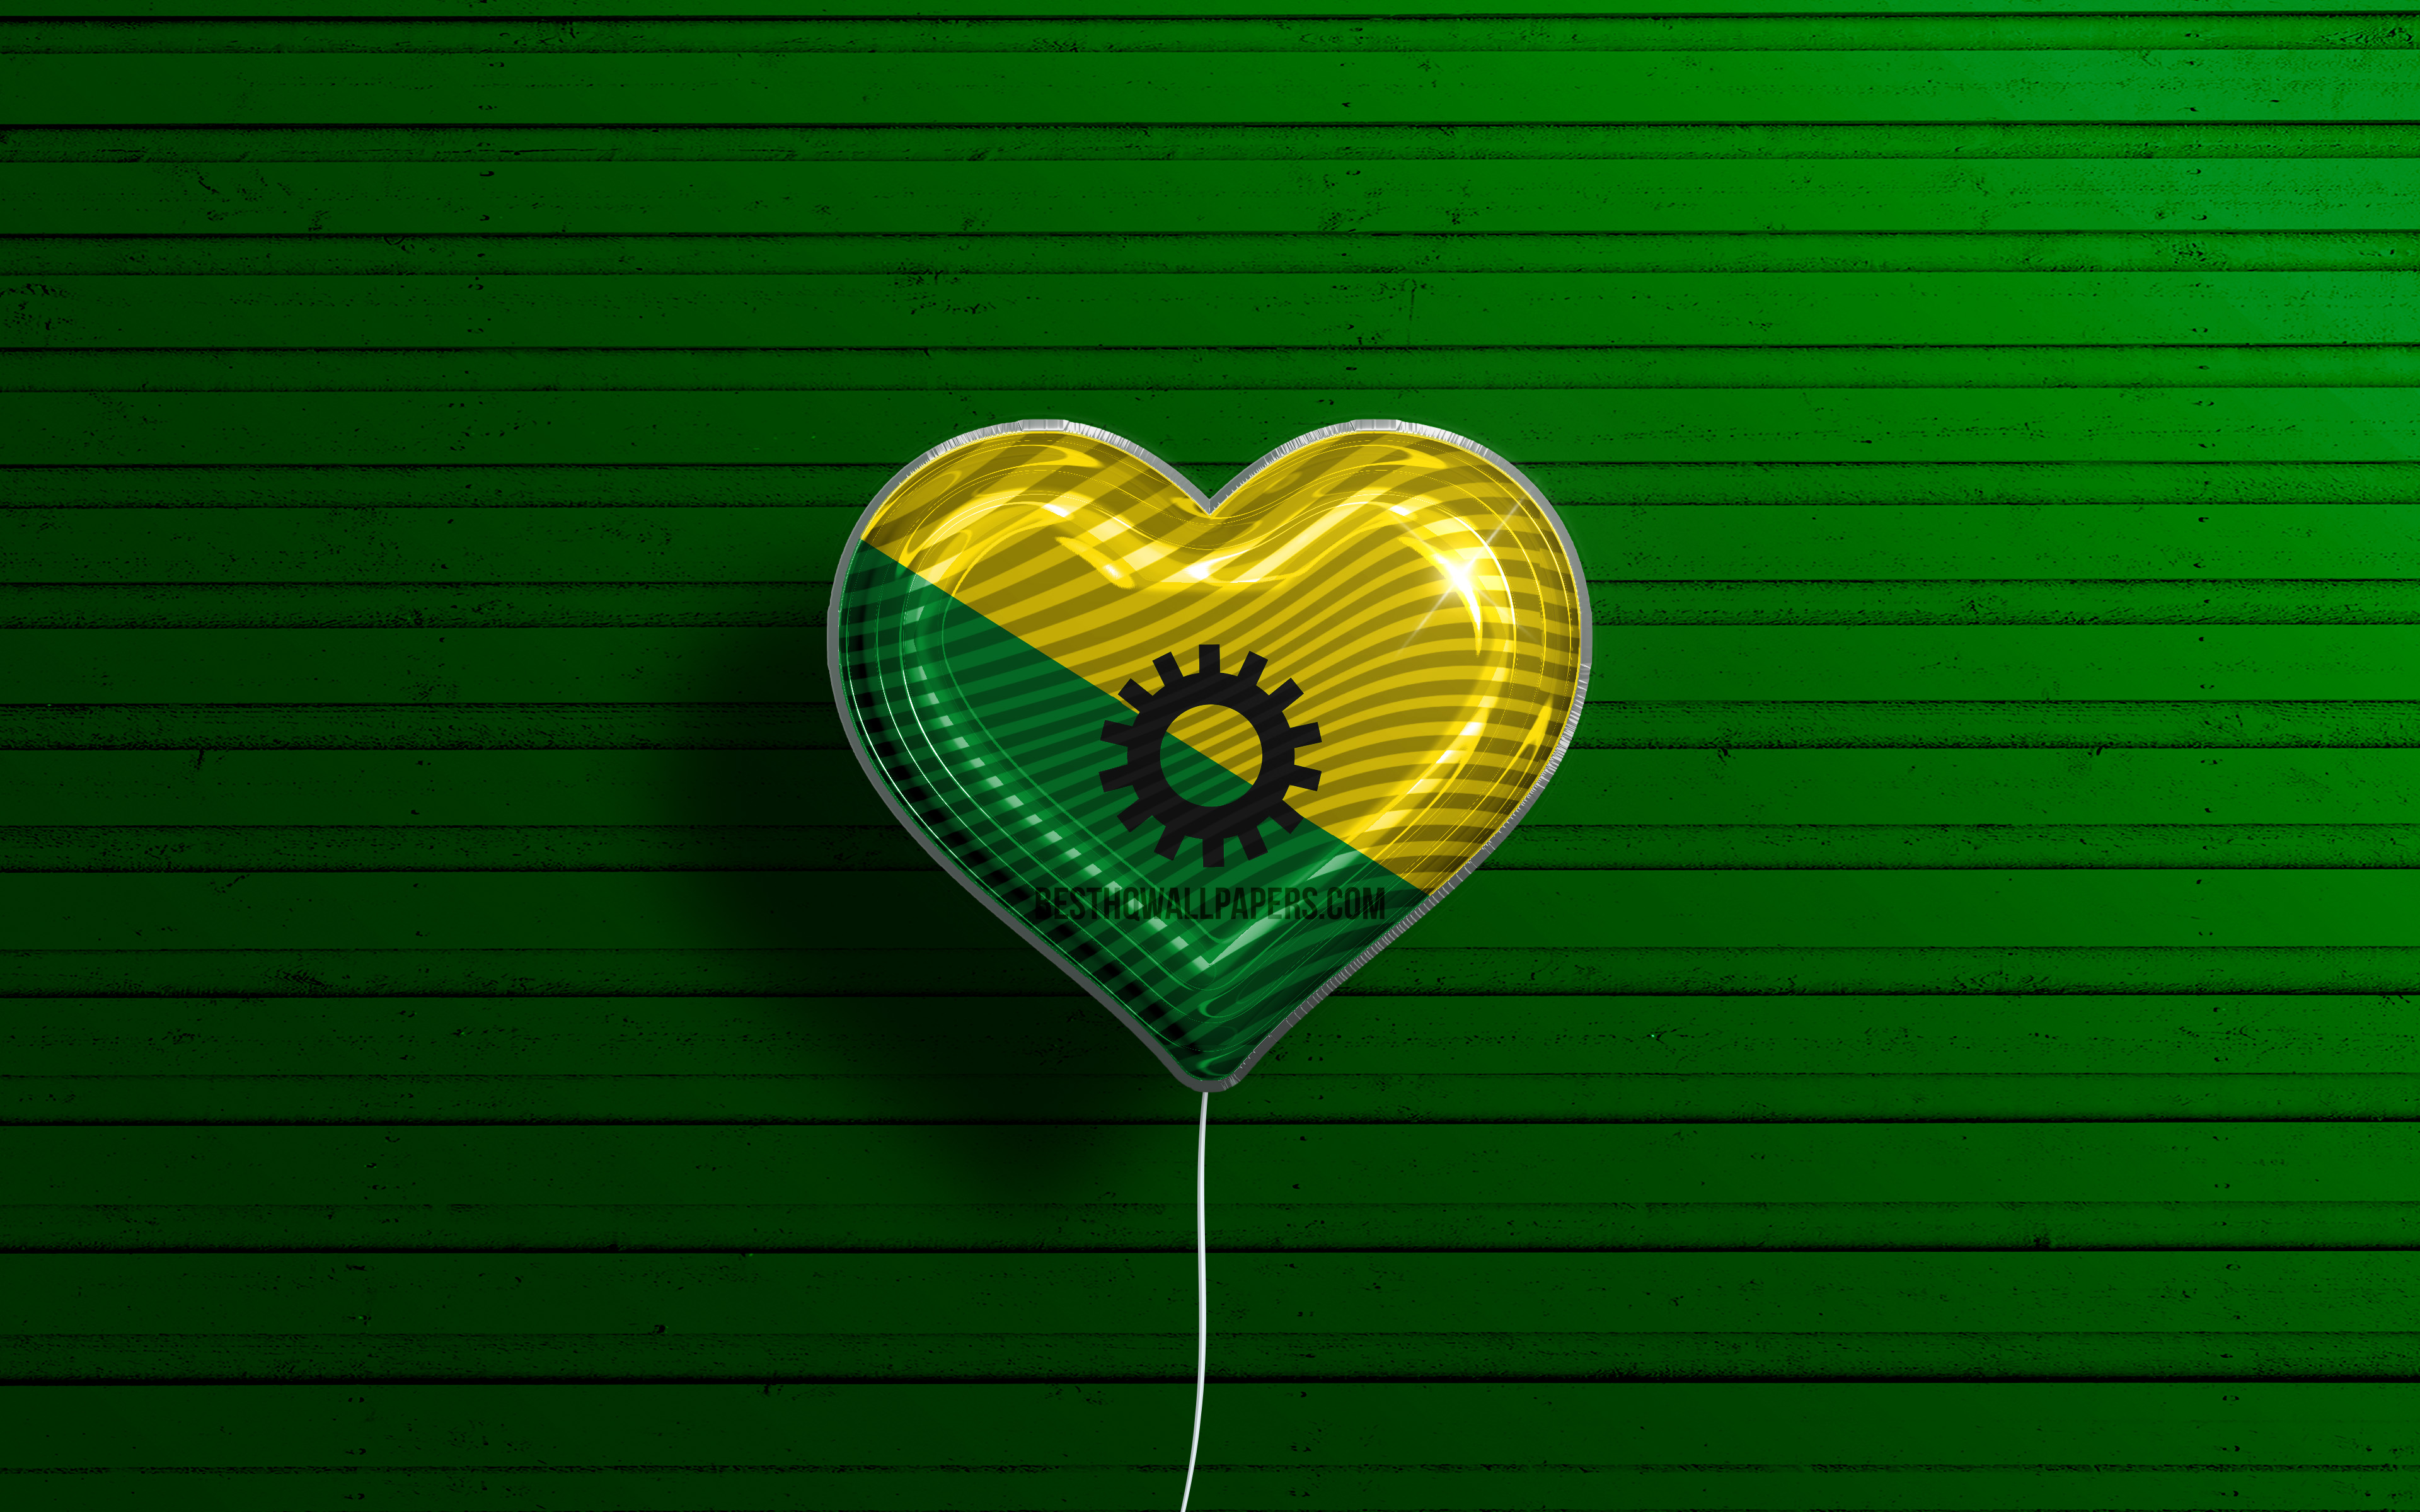 I Love Dosquebradas, 4k, realistic balloons, green wooden background, Day of Dosquebradas, Colombian cities, flag of Dosquebradas, Colombia, balloon with flag, cities of Colombia, Dosquebradas flag, Dosquebradas